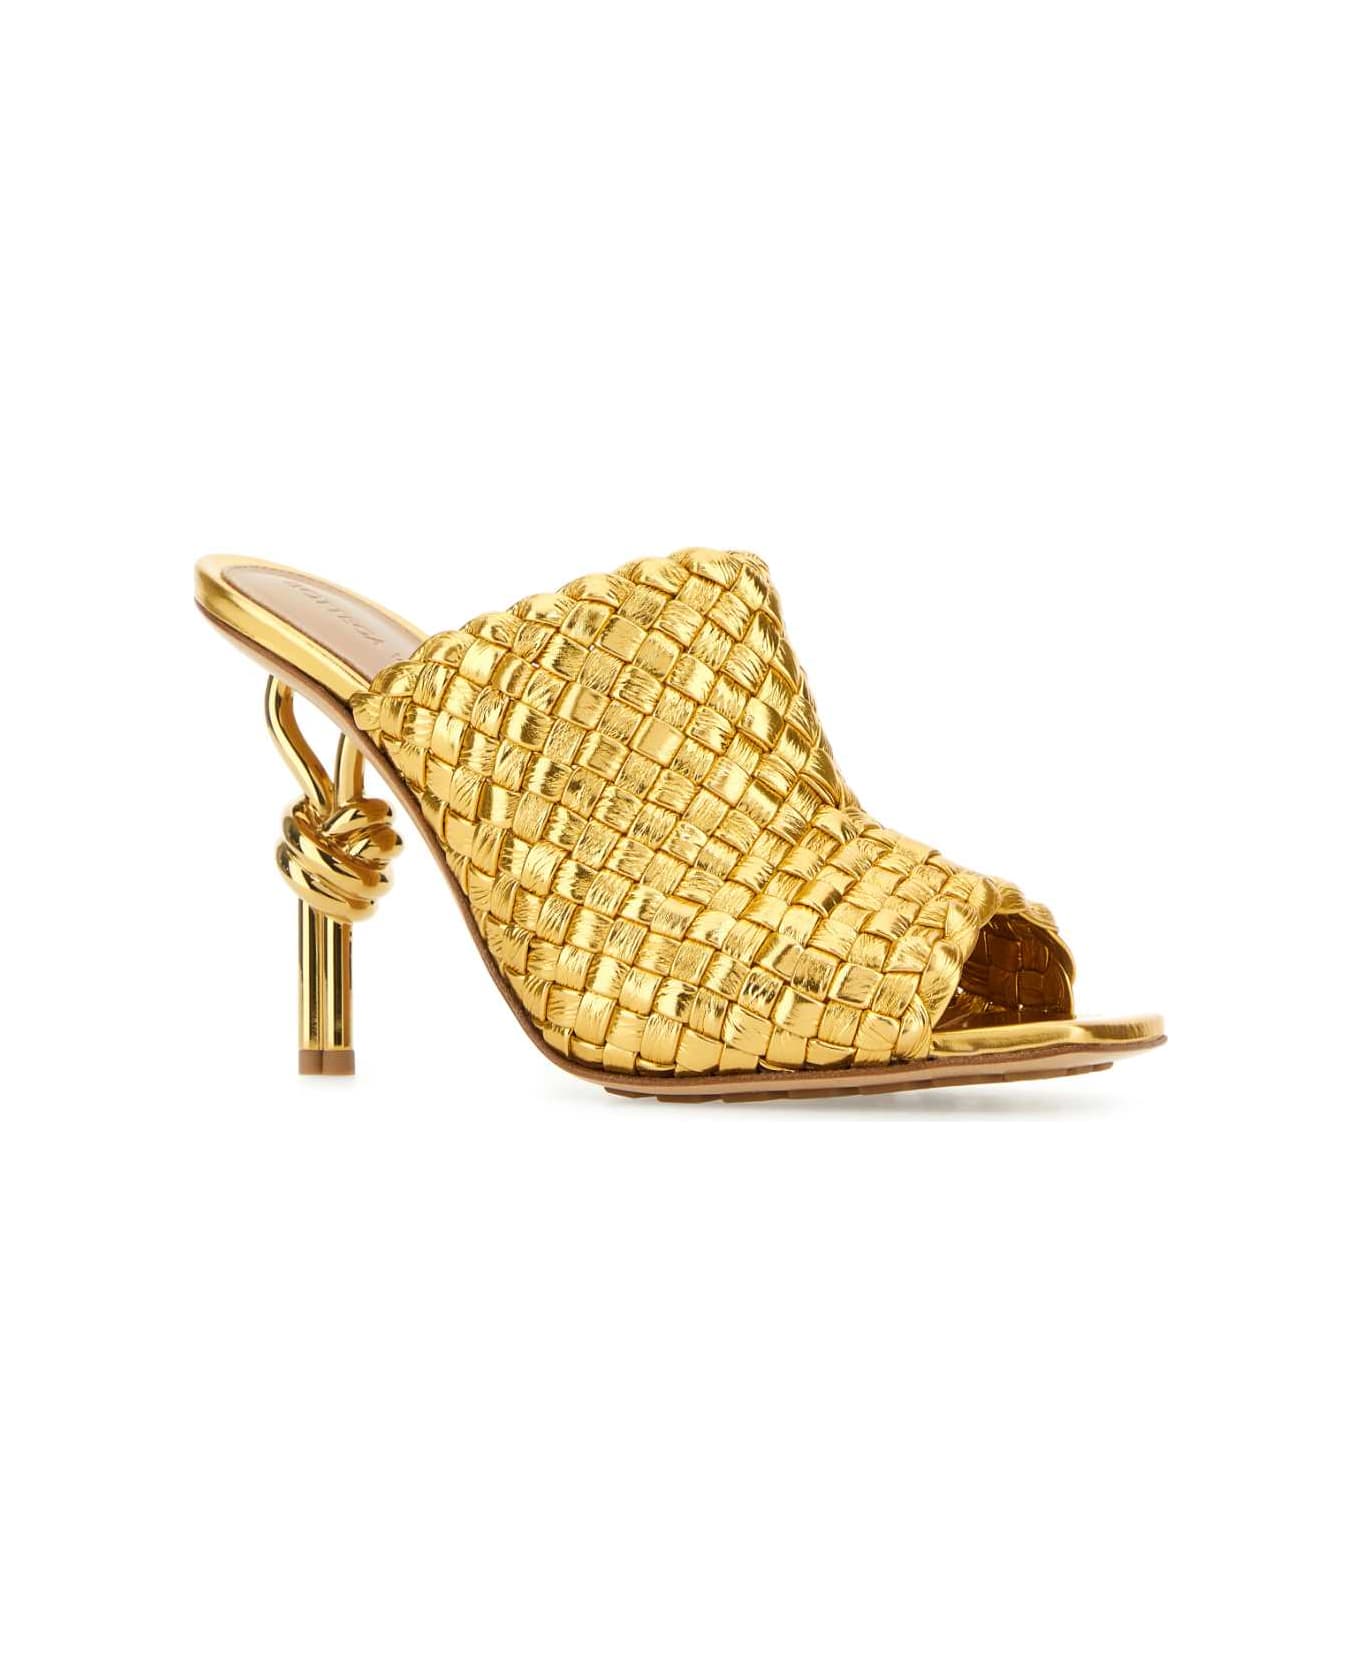 Bottega Veneta Golden Leather Knot Mules - GOLD